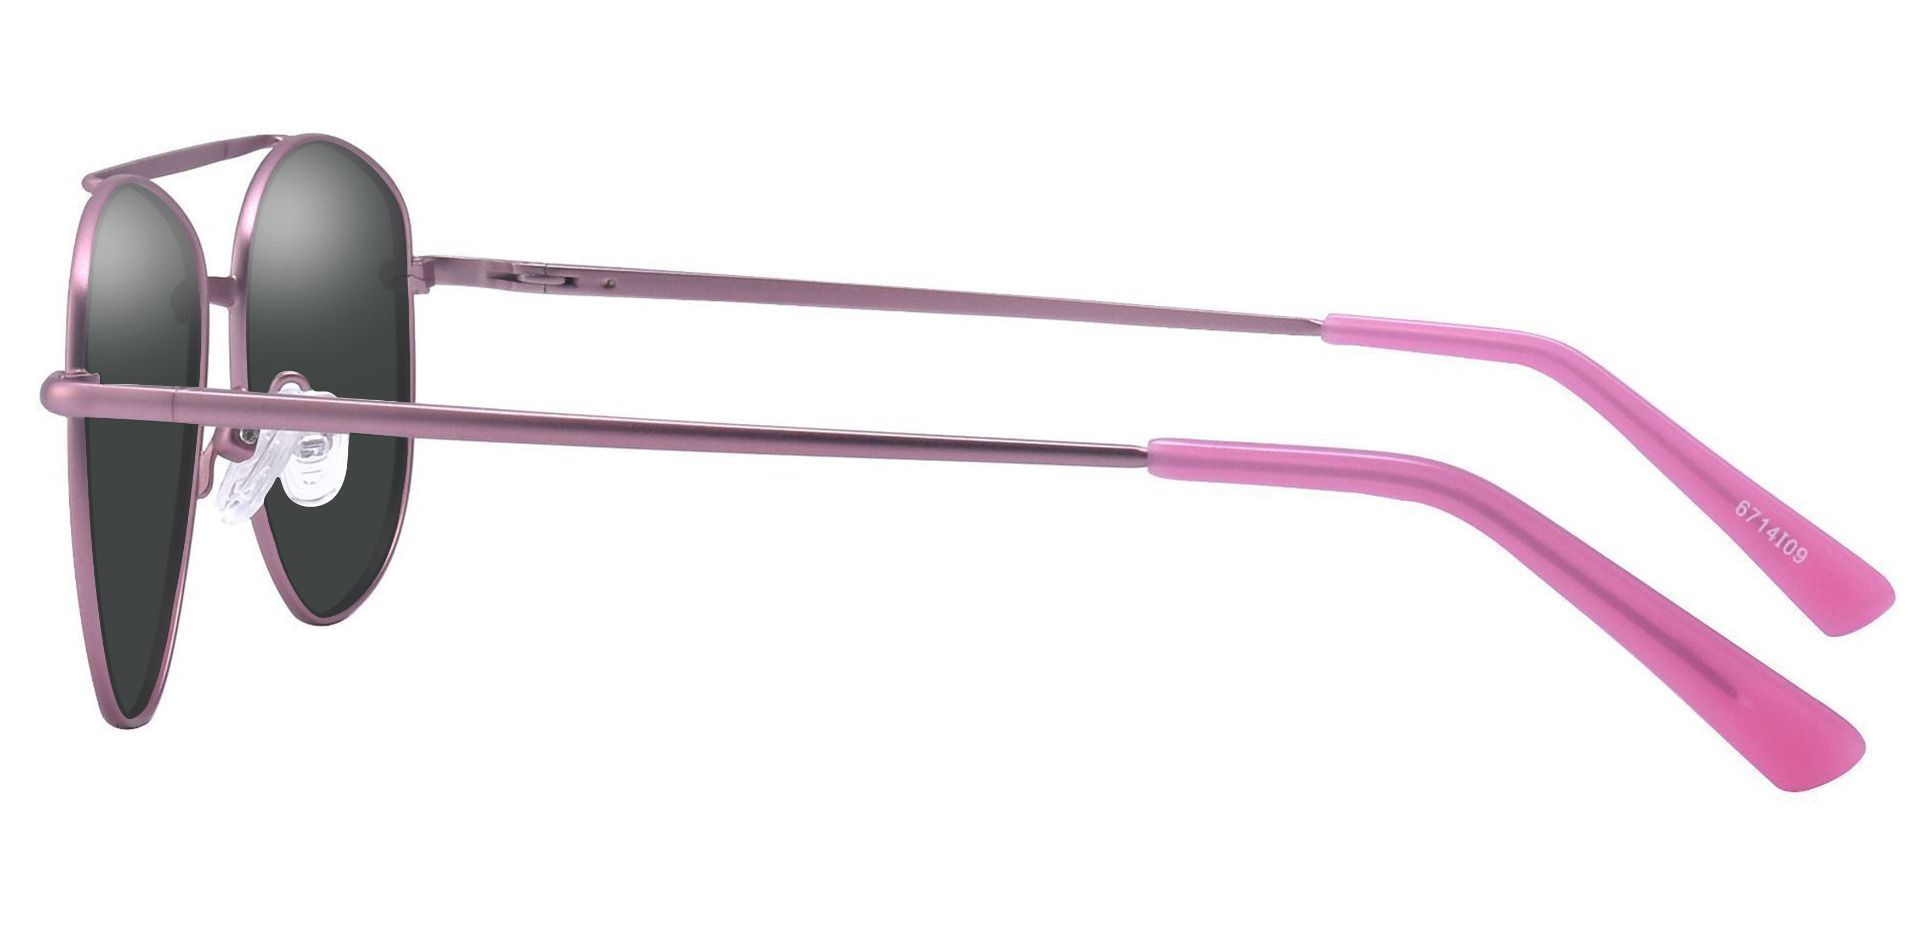 Dwight Aviator Prescription Sunglasses - Pink Frame With Gray Lenses